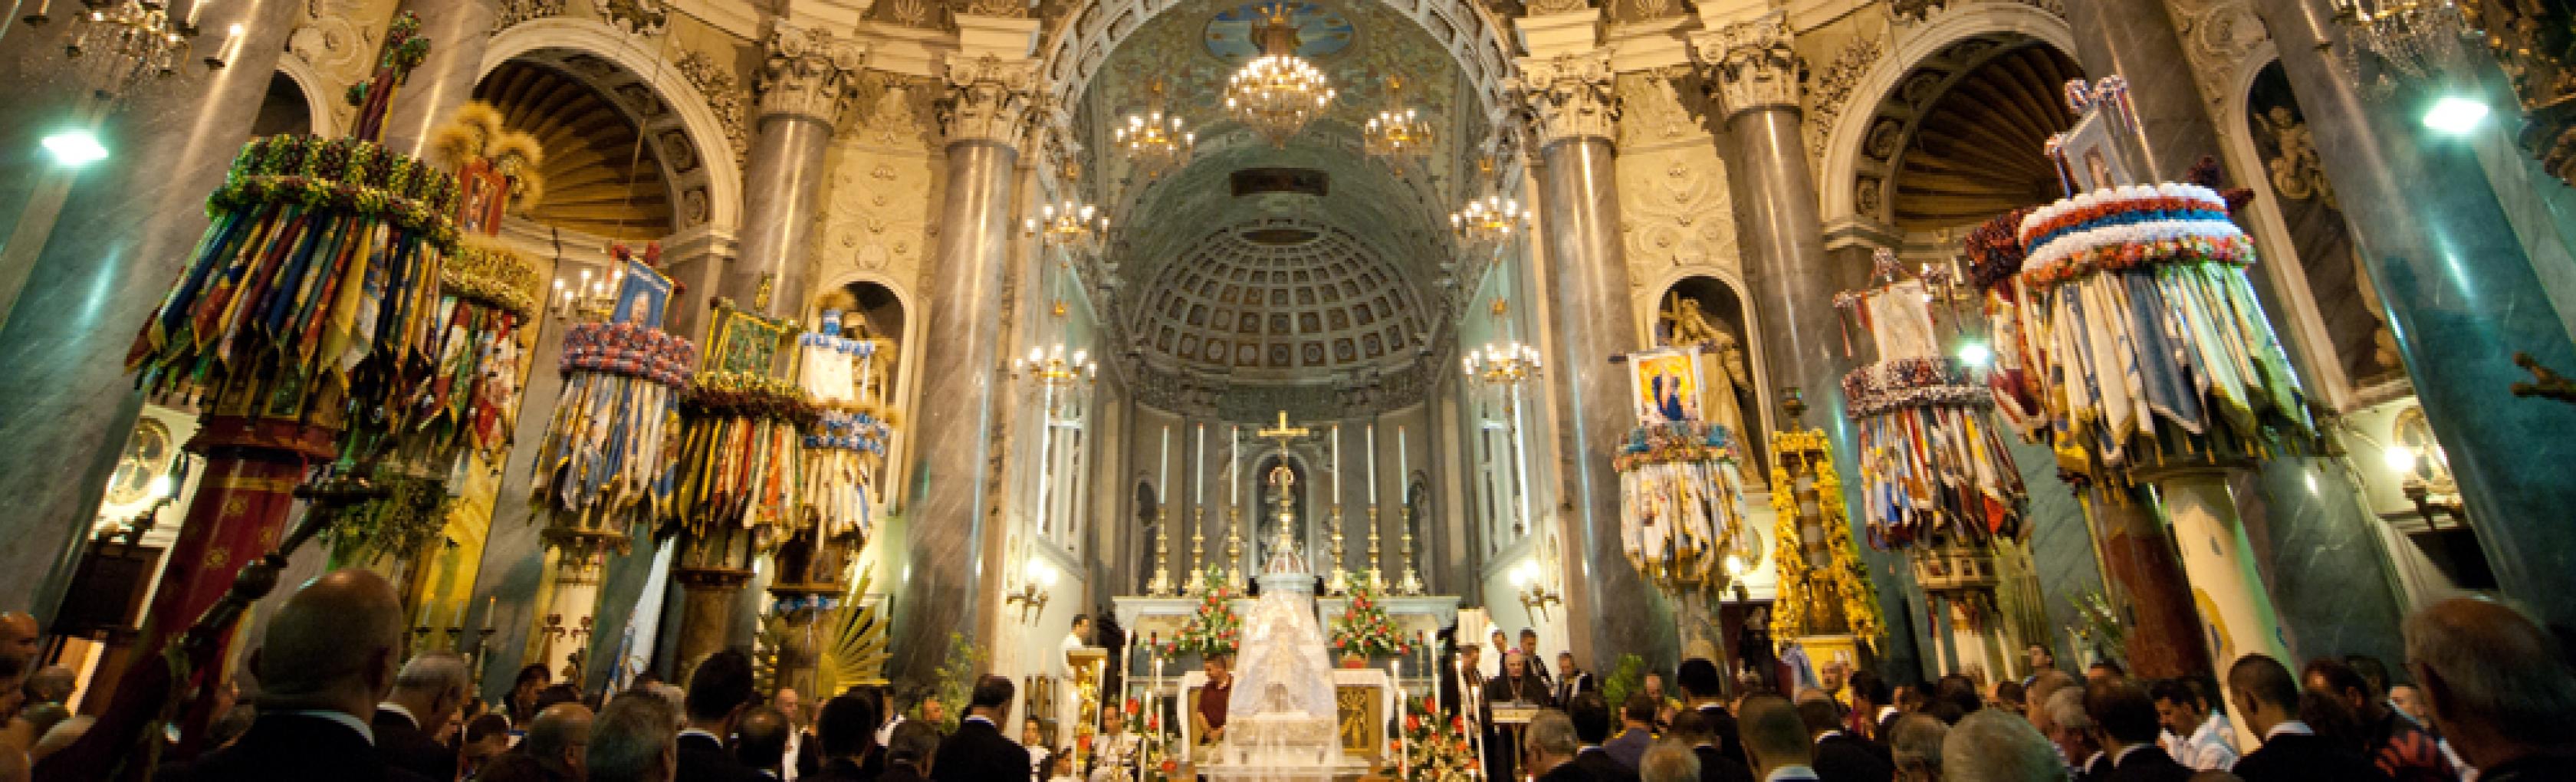 Candelieri - Chiesa di santa Maria